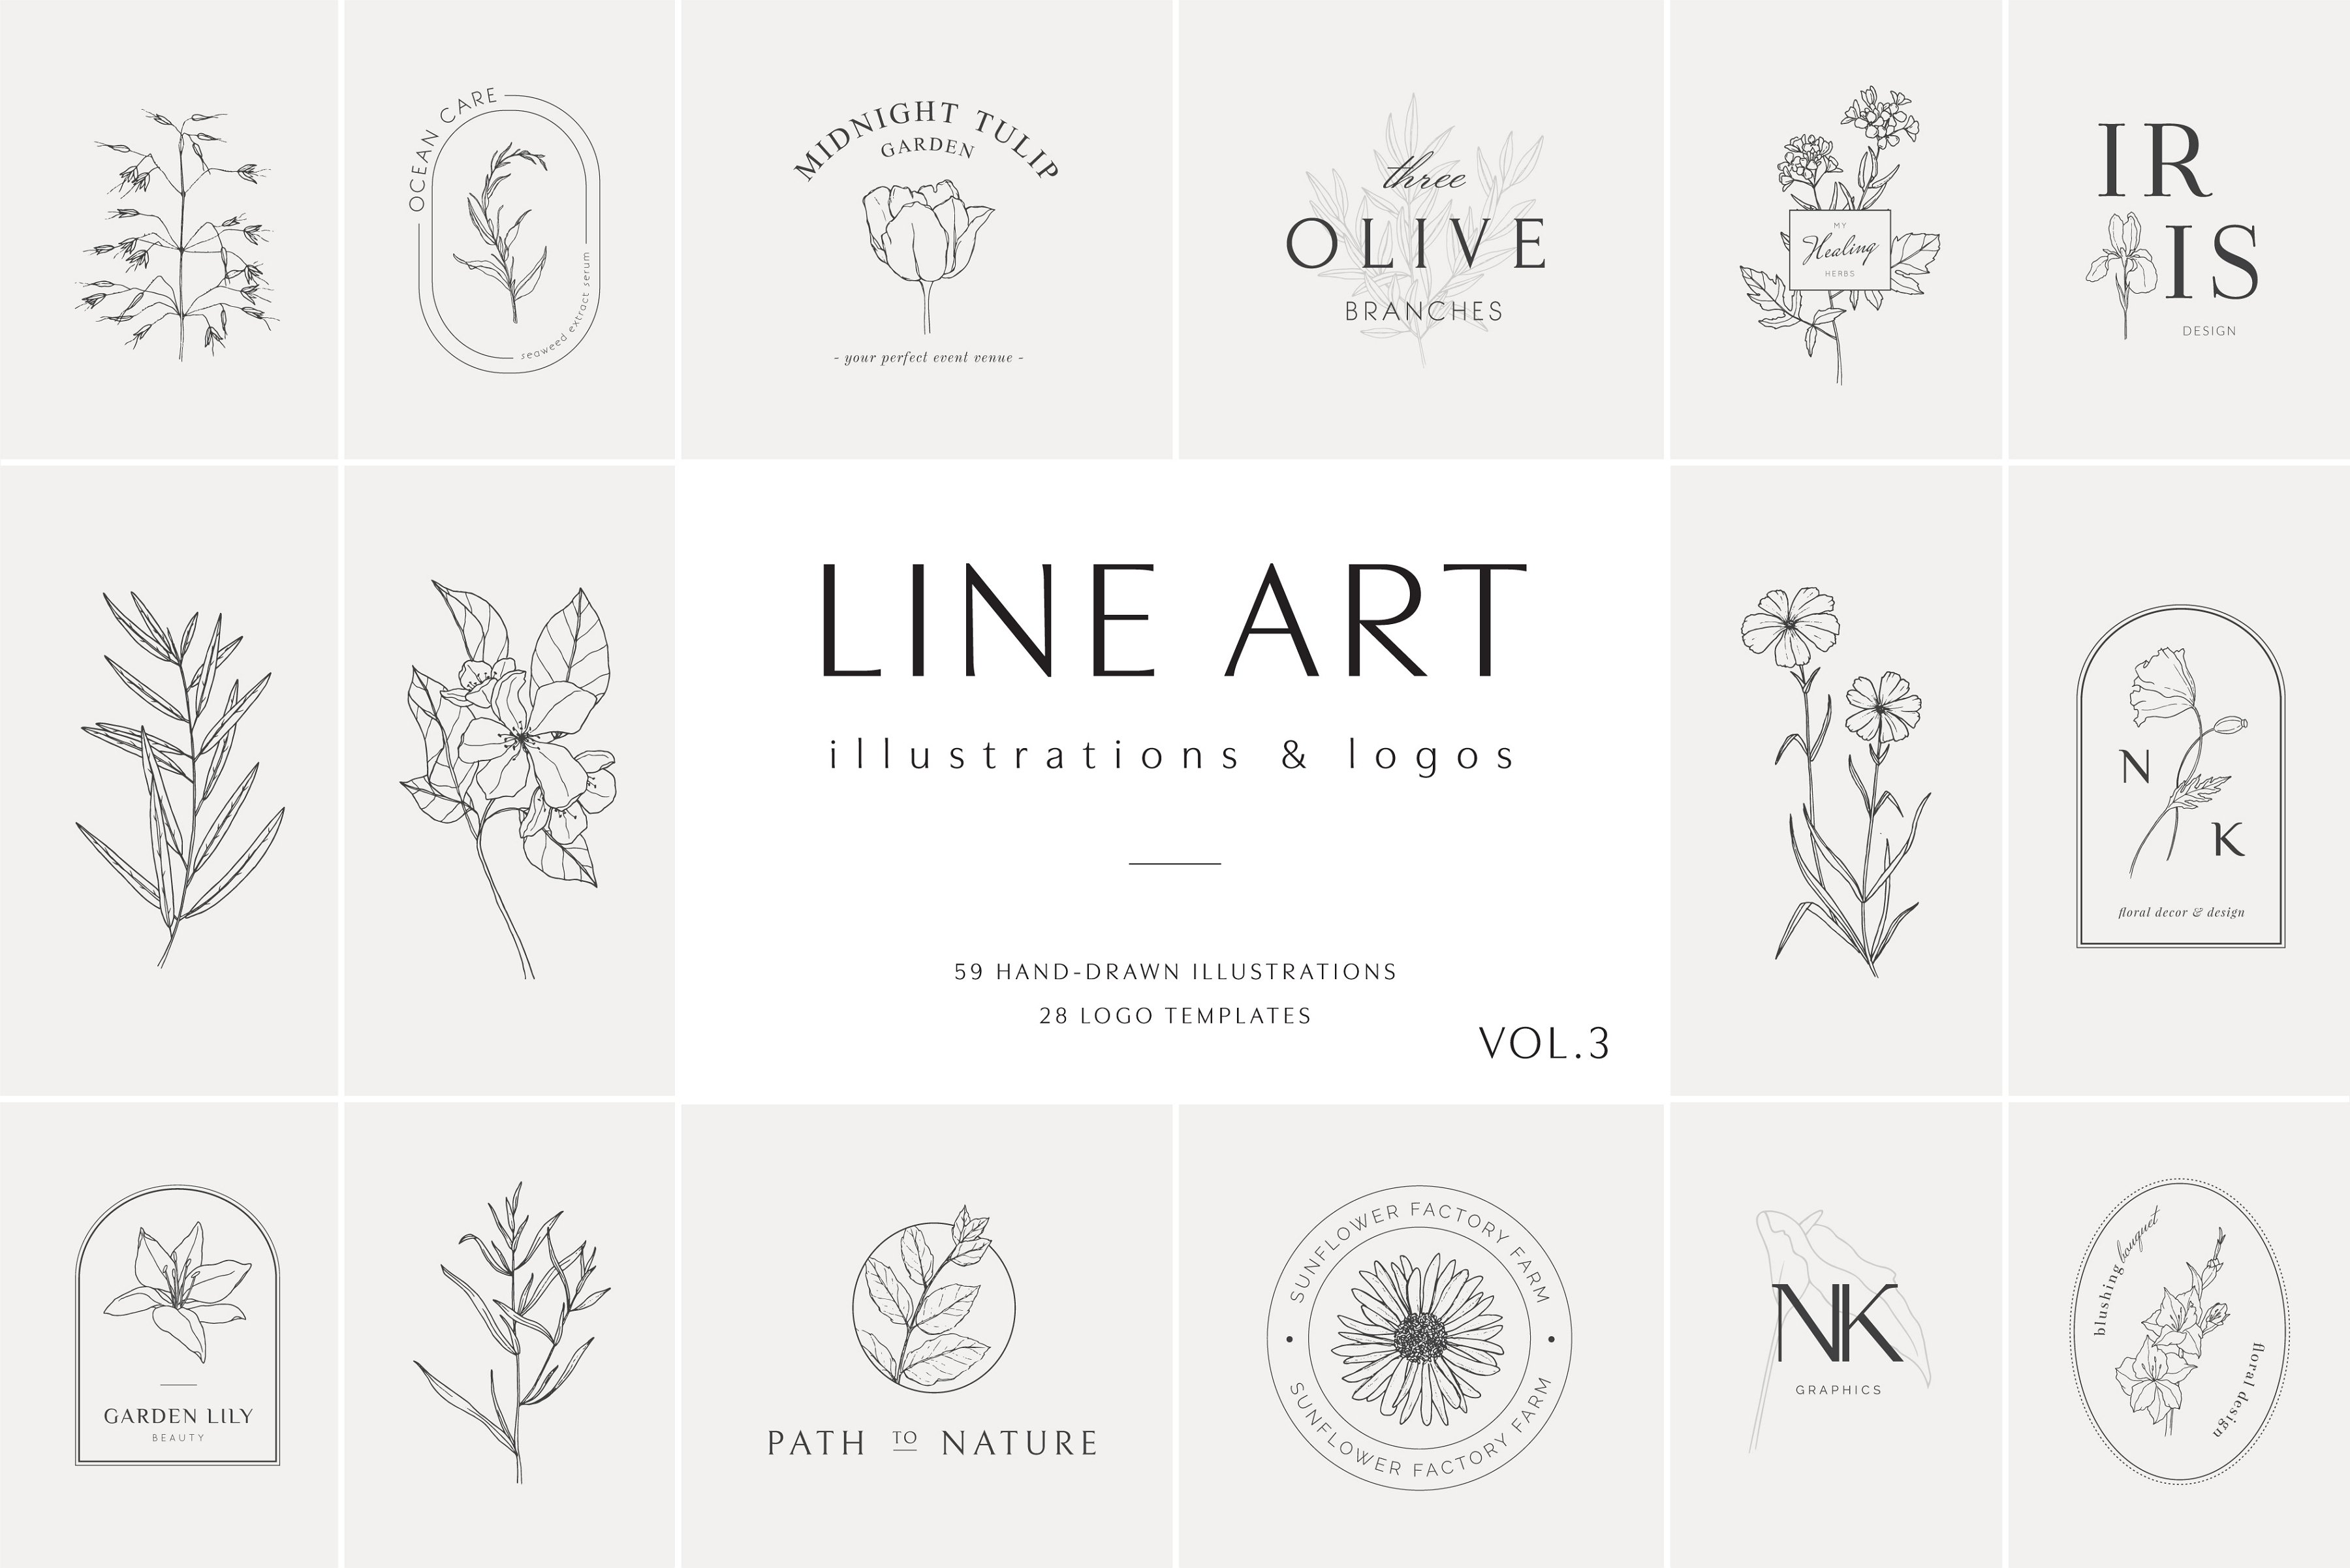 Line art logos Vol. 3 cover image.